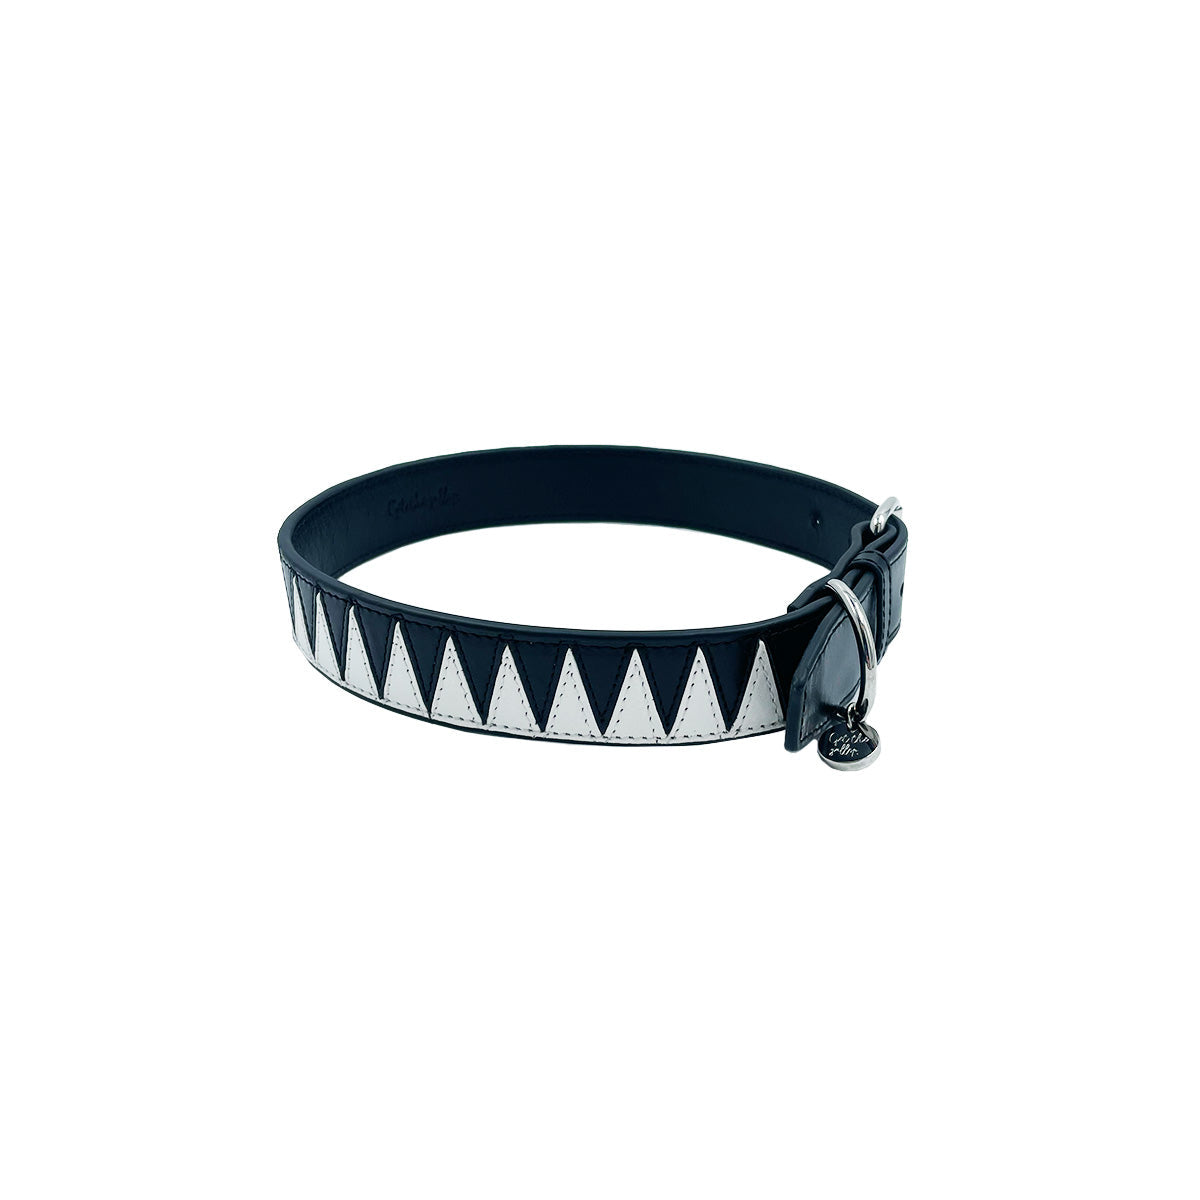 Sharktooth Dog Collar Leather & Suede